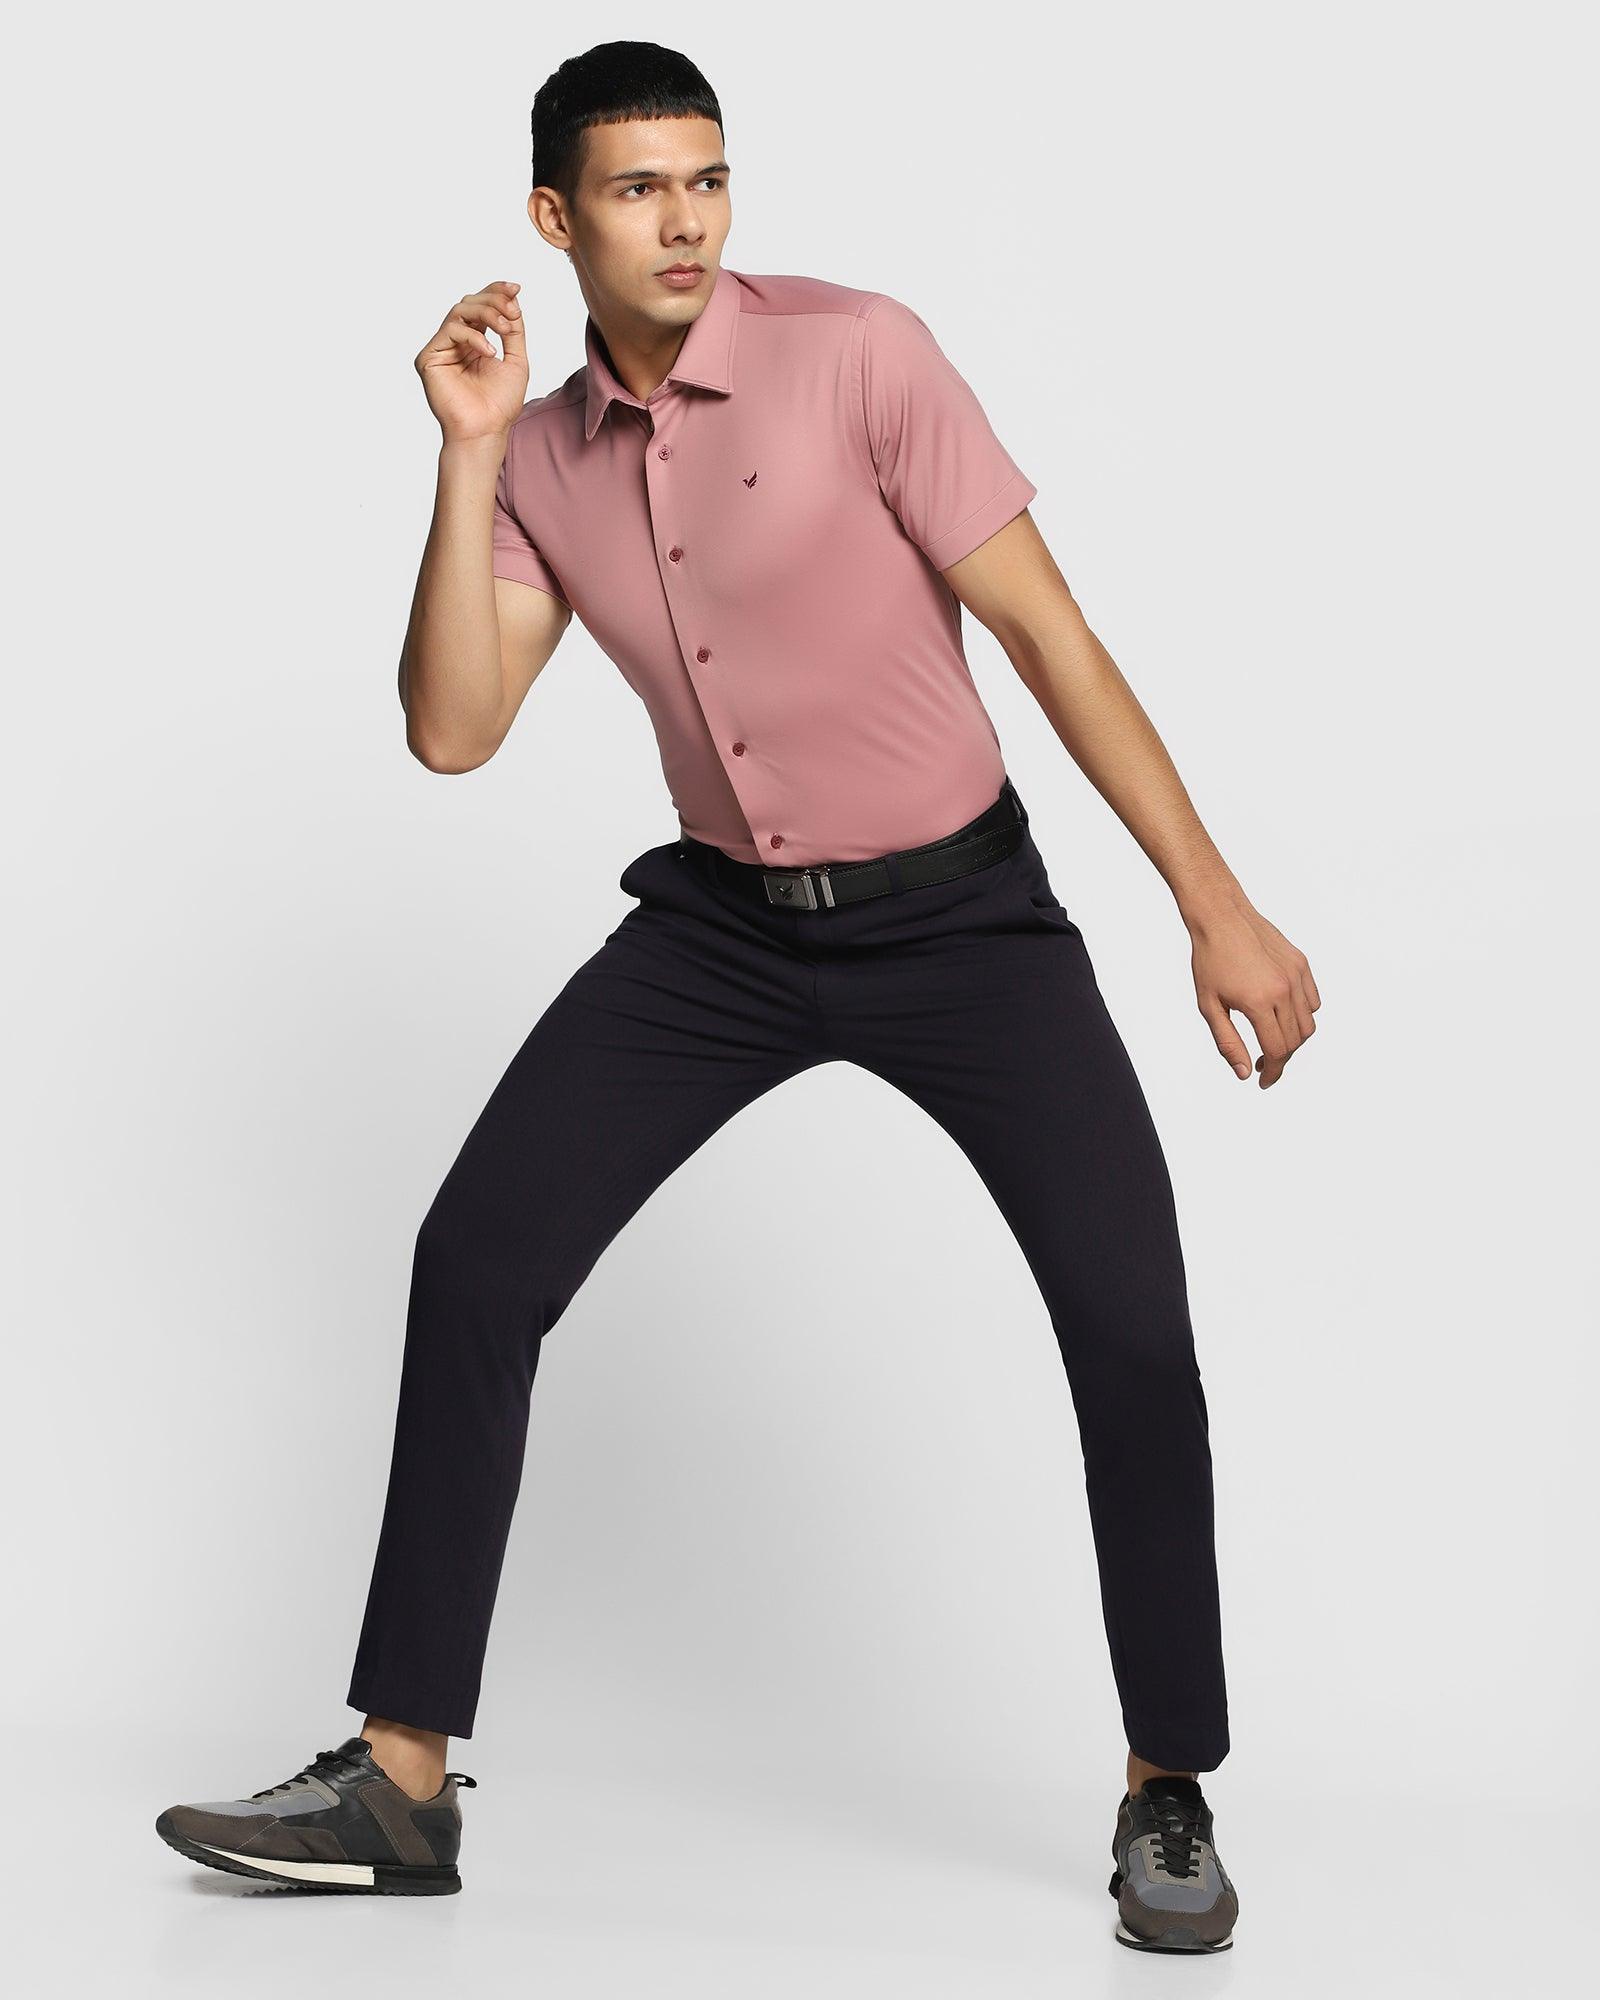 TechPro Formal Half Sleeve Pink Solid Shirt - Payback